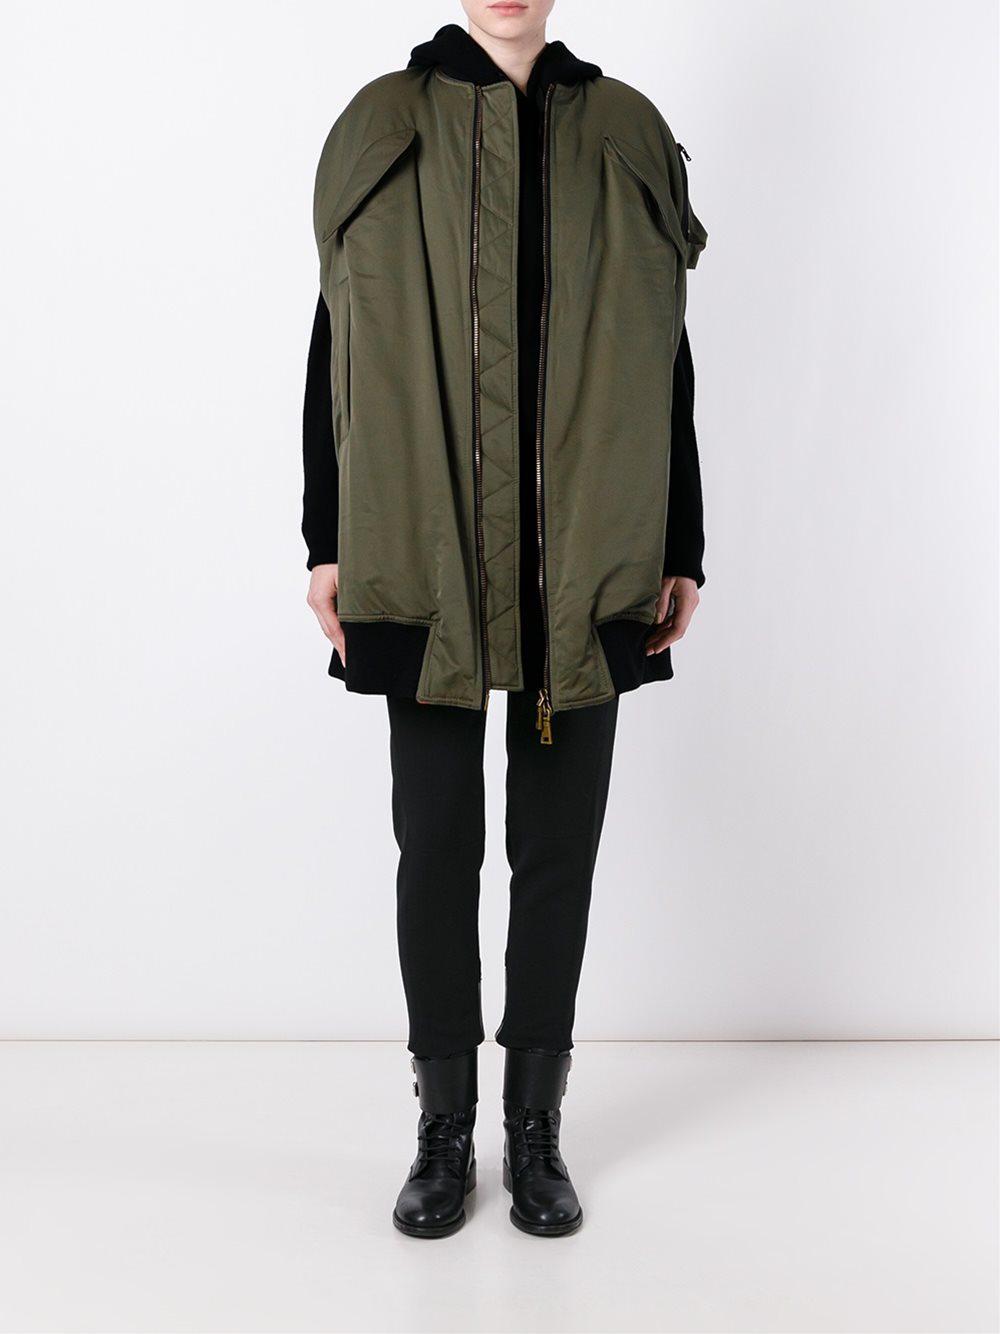 Erika Cavallini Semi Couture Wool Oversized Sleeveless Bomber Jacket in ...